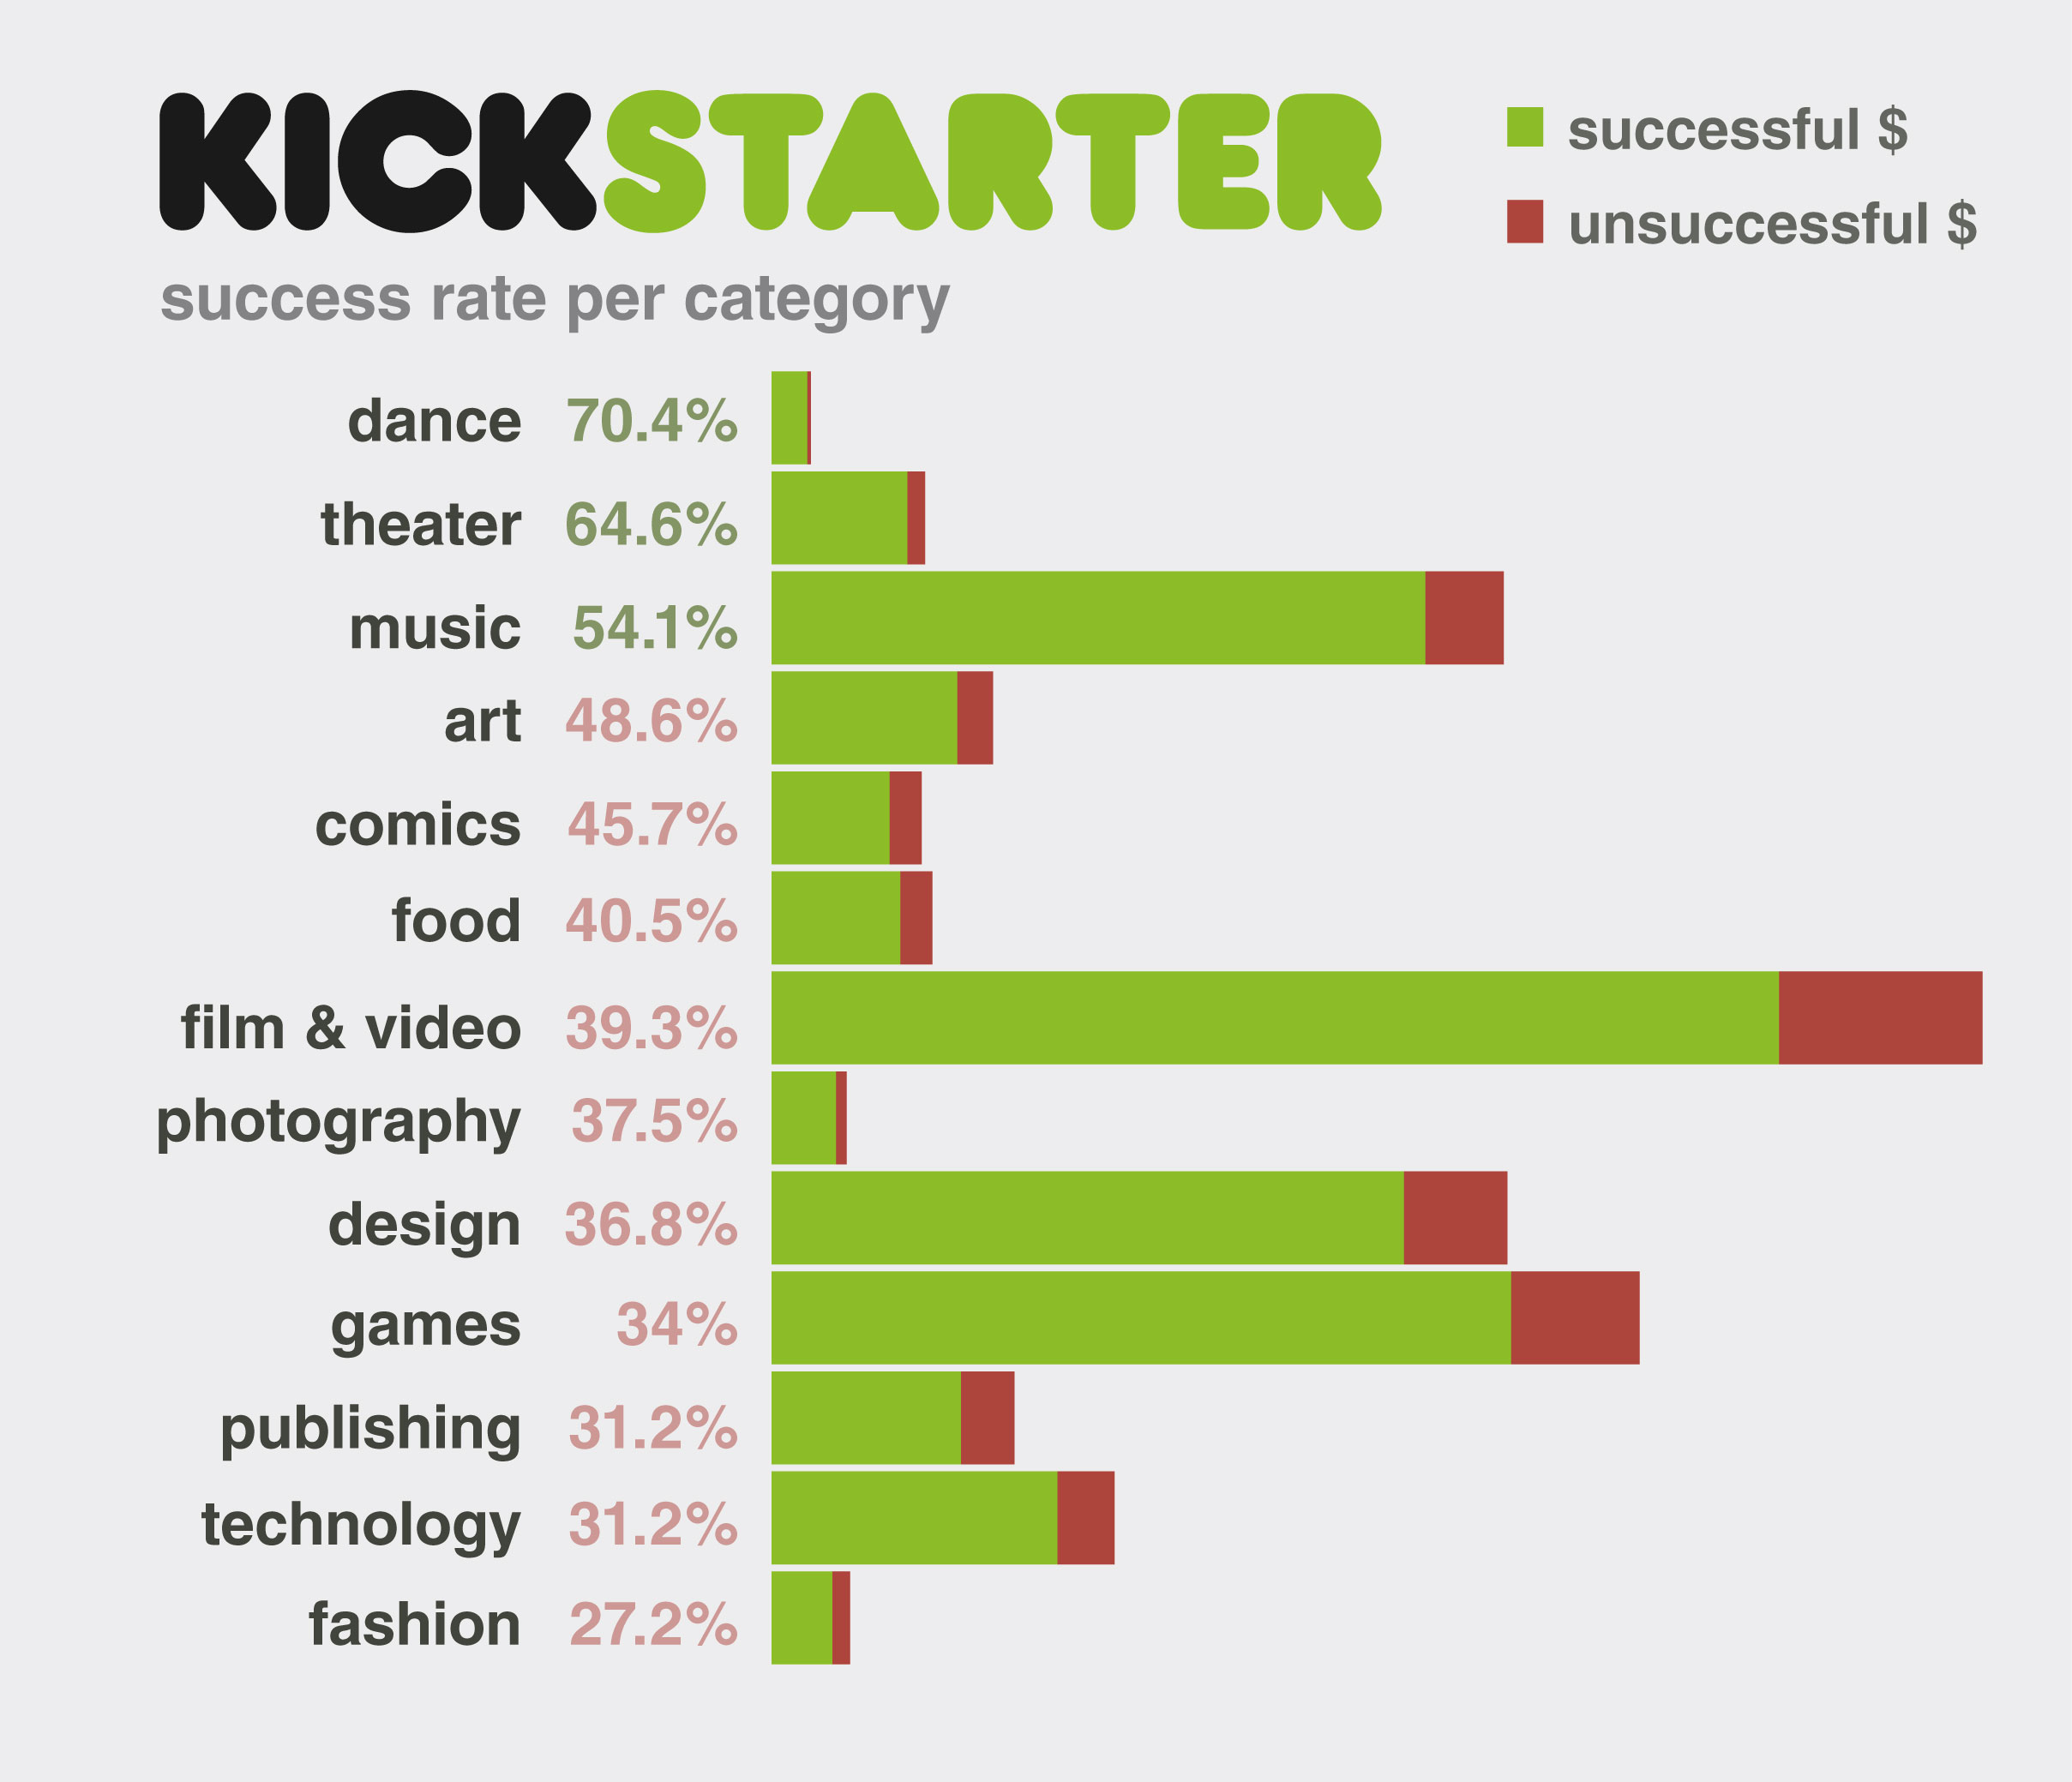 http://www.therobotspajamas.com/wp-content/uploads/2013/08/kickstarter_graph51.jpg